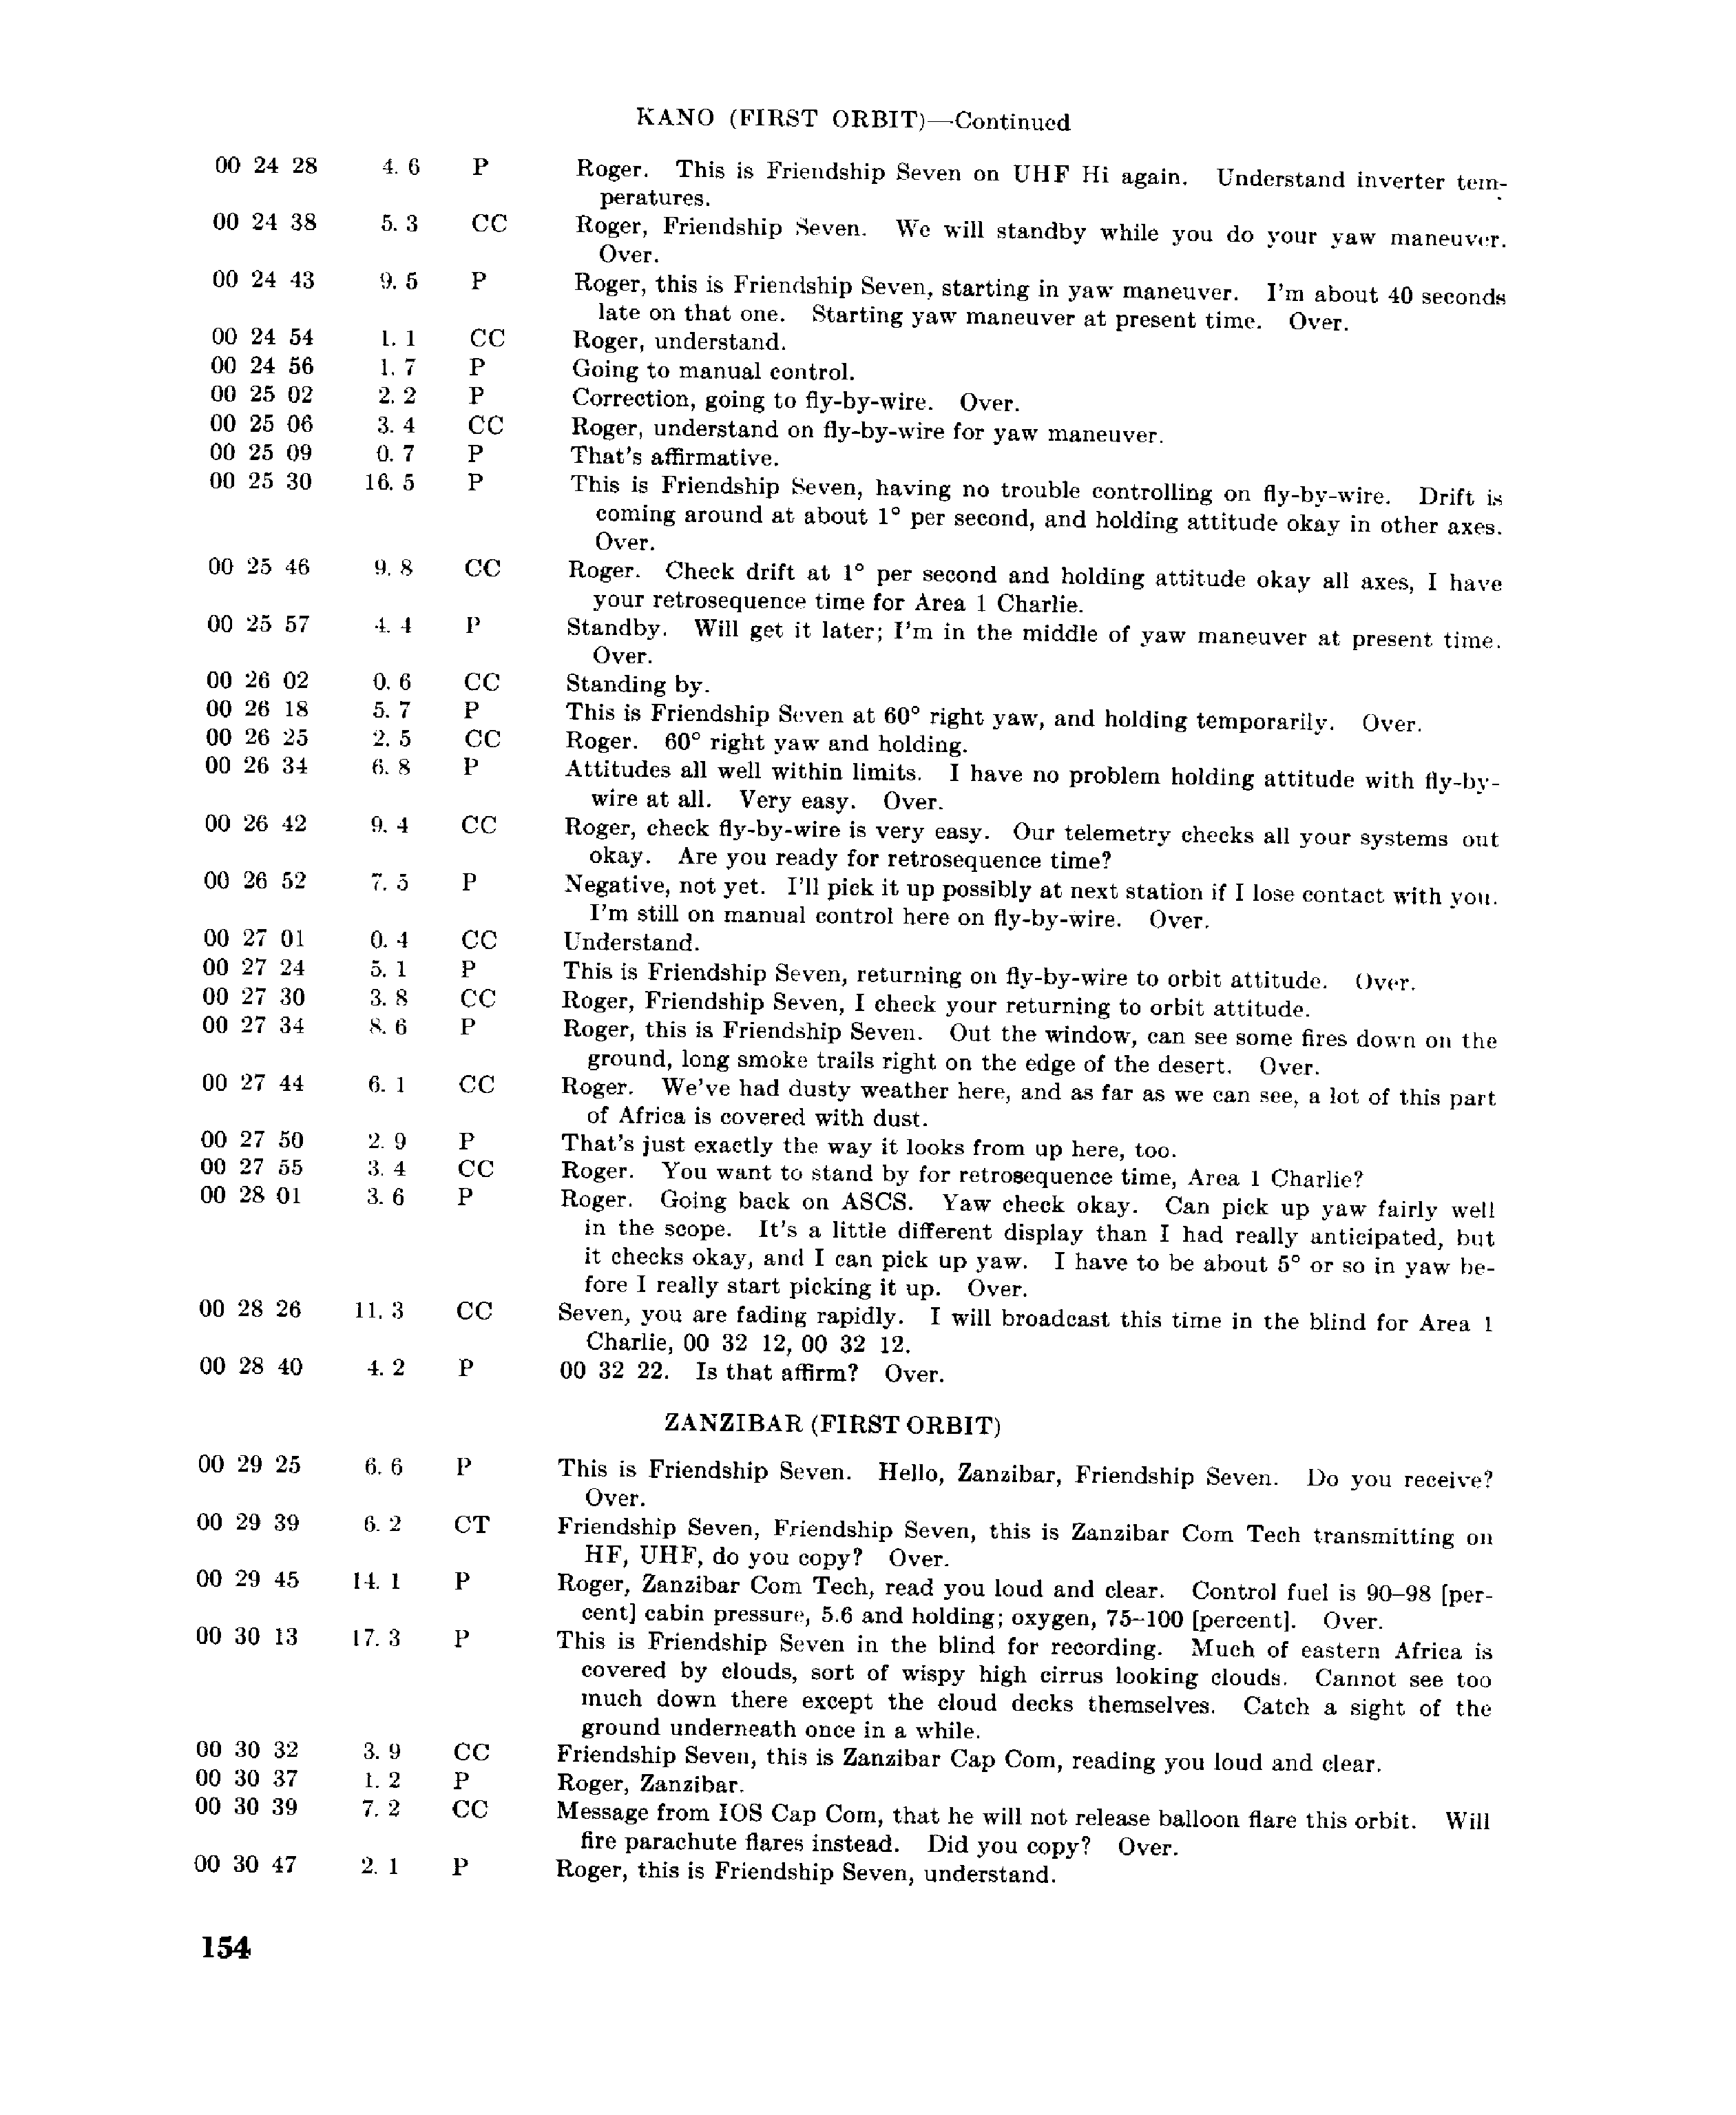 Page 153 of Mercury 6’s original transcript